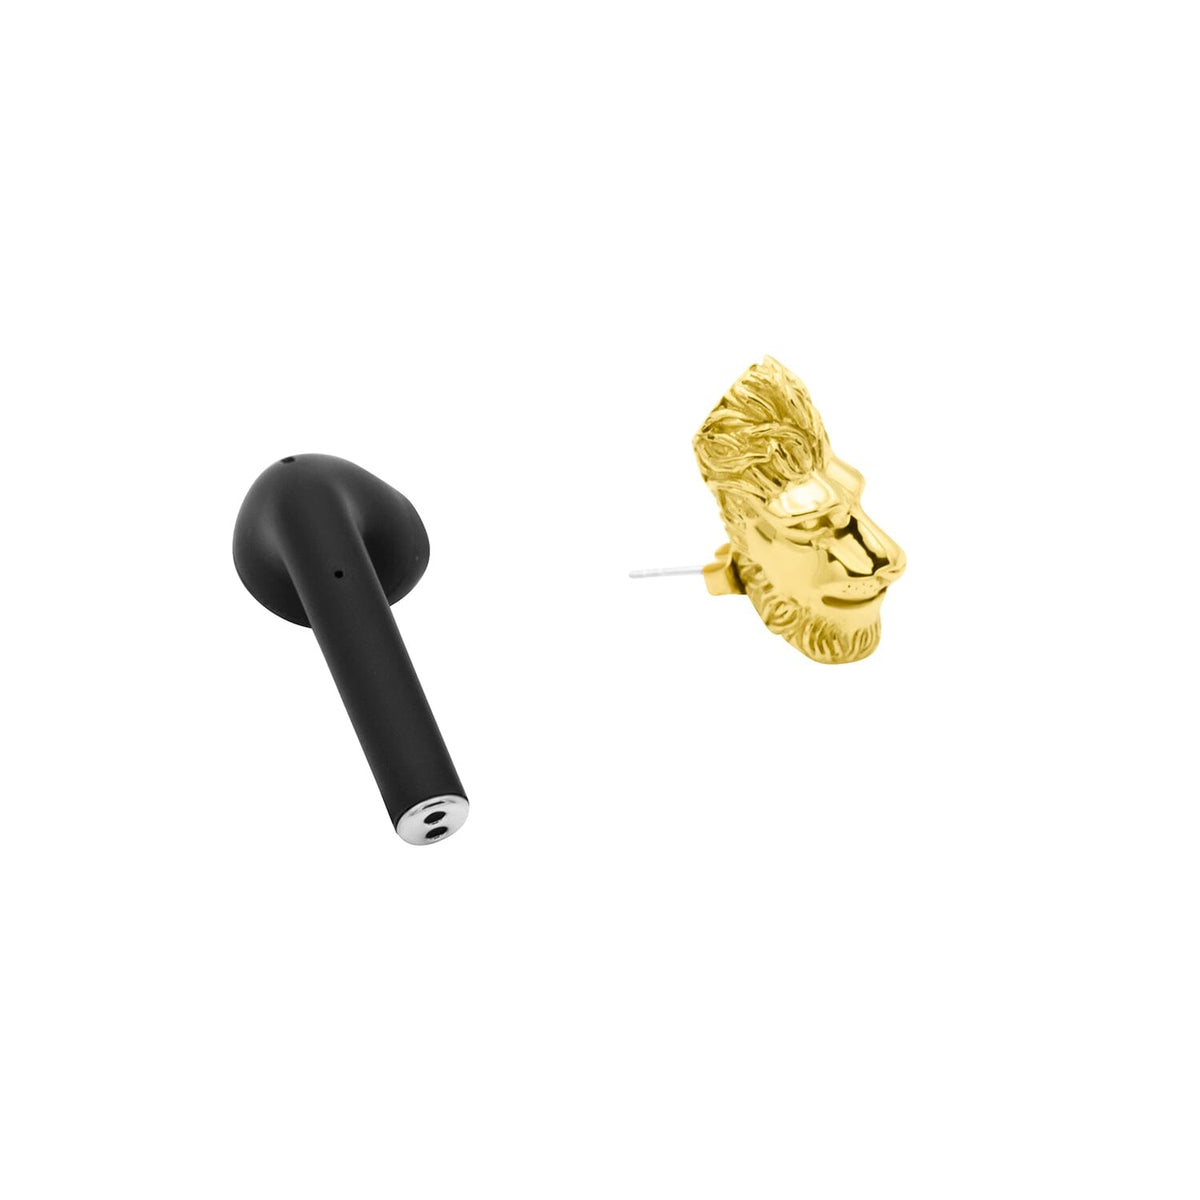 Lion Airpod Earring